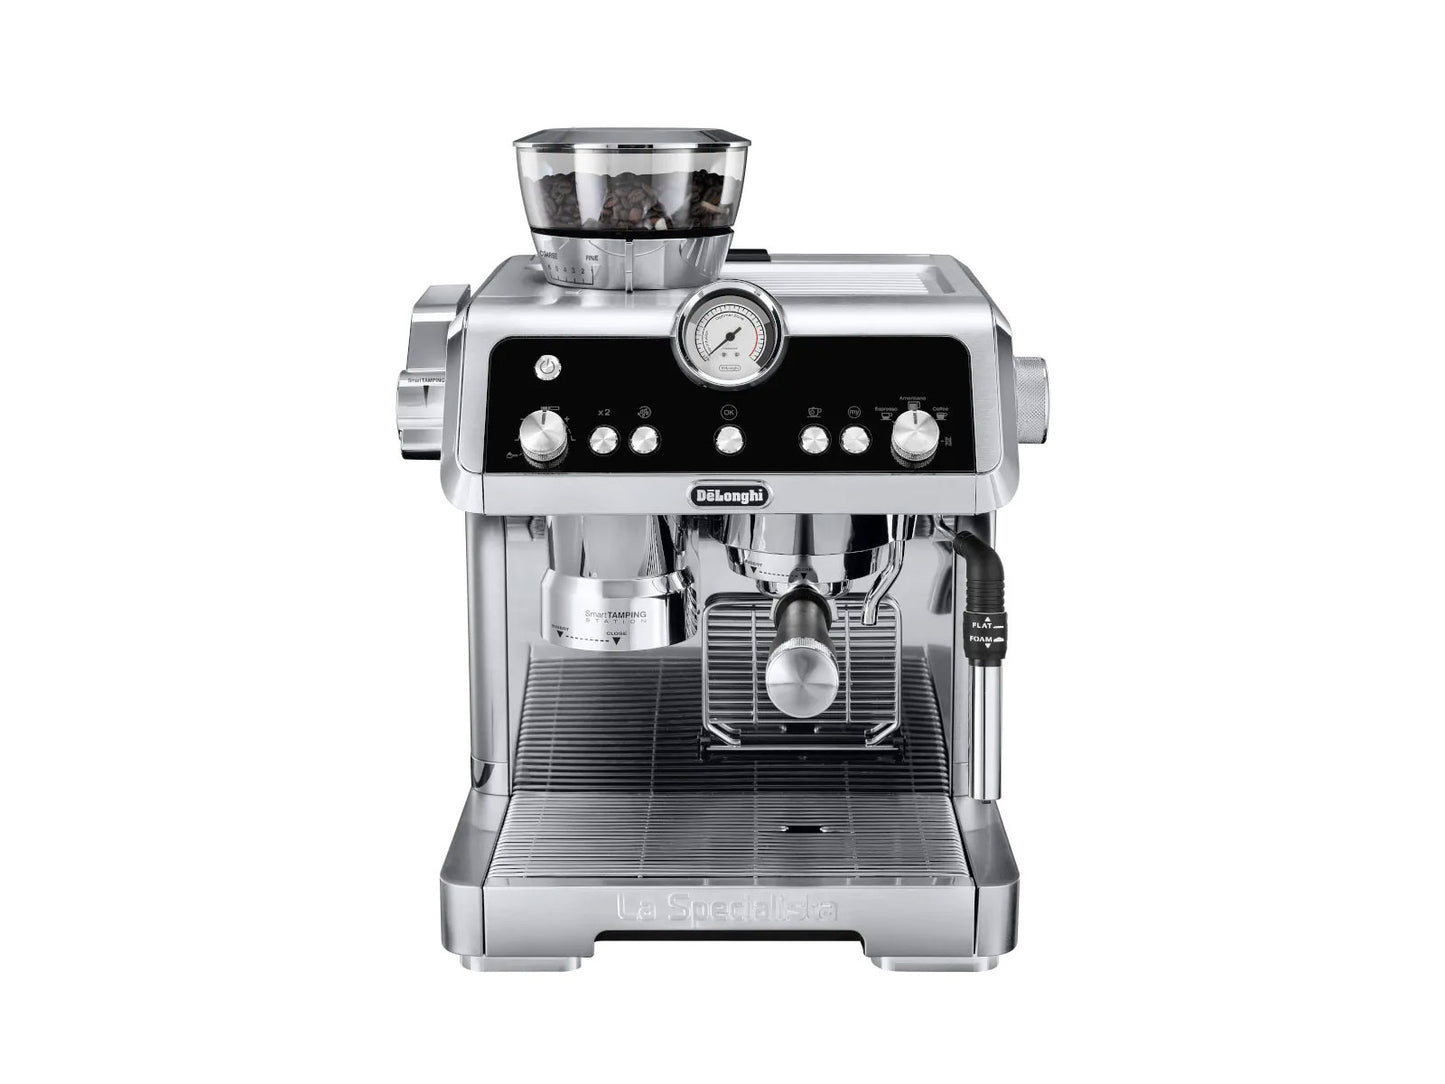 DeLonghi La Specialista Pump Espresso Coffee Machine